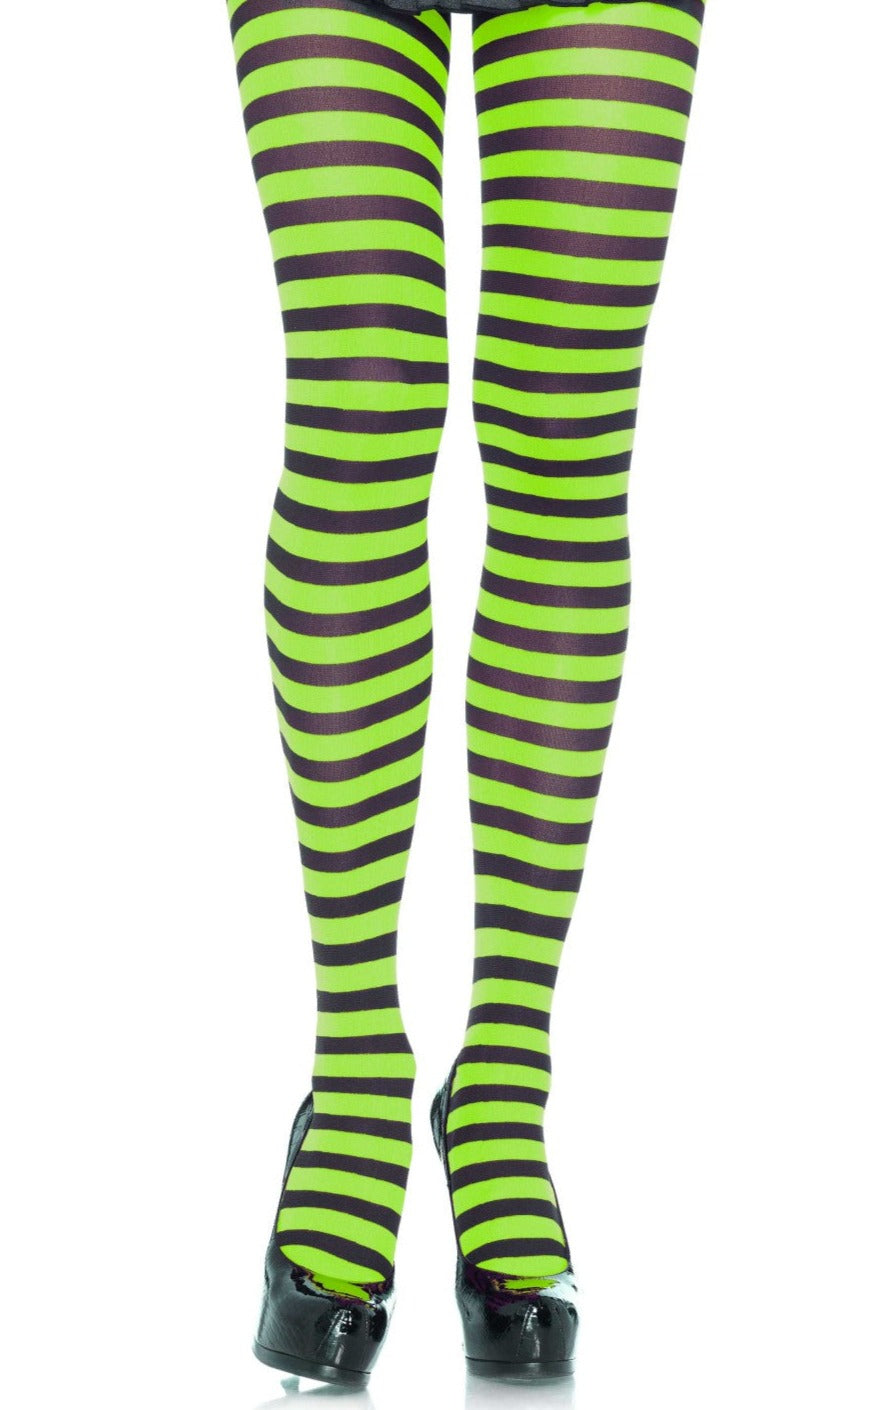 Leg Avenue 7100 Nylon Stripe Tights - neon green and black horizontal striped pantyhose